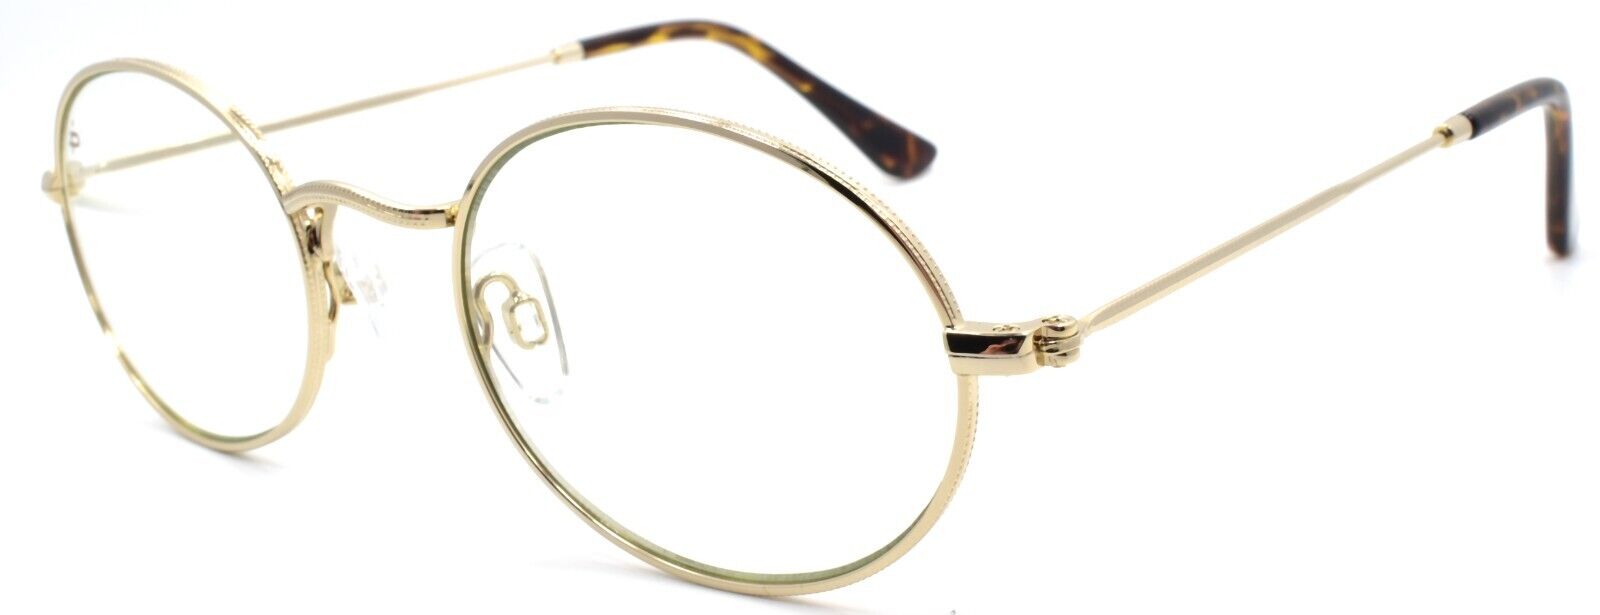 1-Prive Revaux The Douglas Eyeglasses Frames Anti Blue Light RX-ready Gold-818893023118-IKSpecs